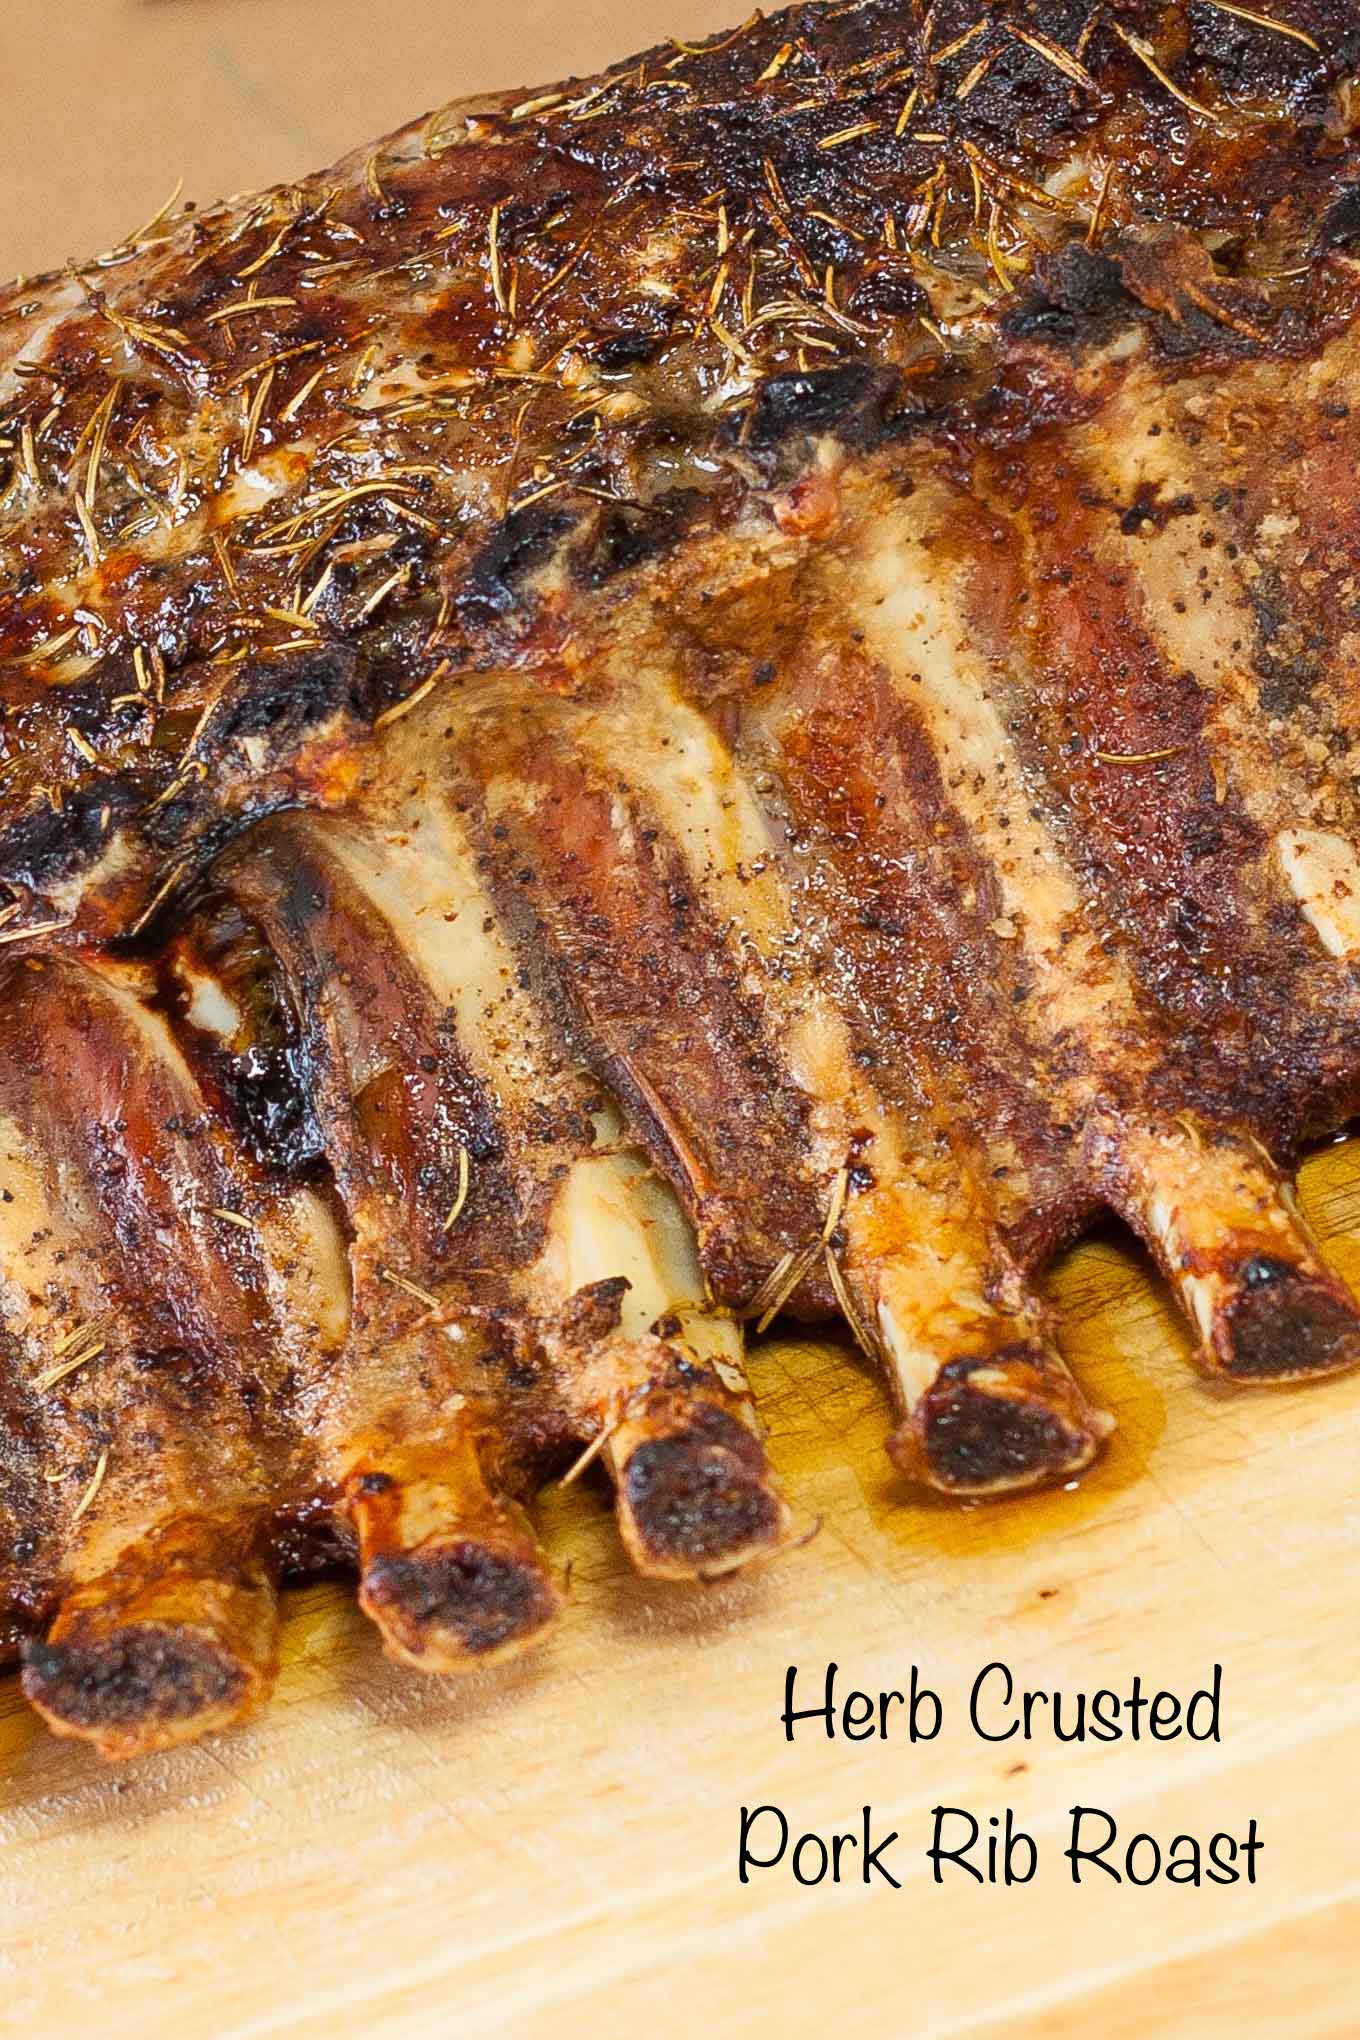 Herb Crusted Pork Rib Roast is an easy recipe. Oven-roasted to make tender and juicy pork. via @artandthekitch